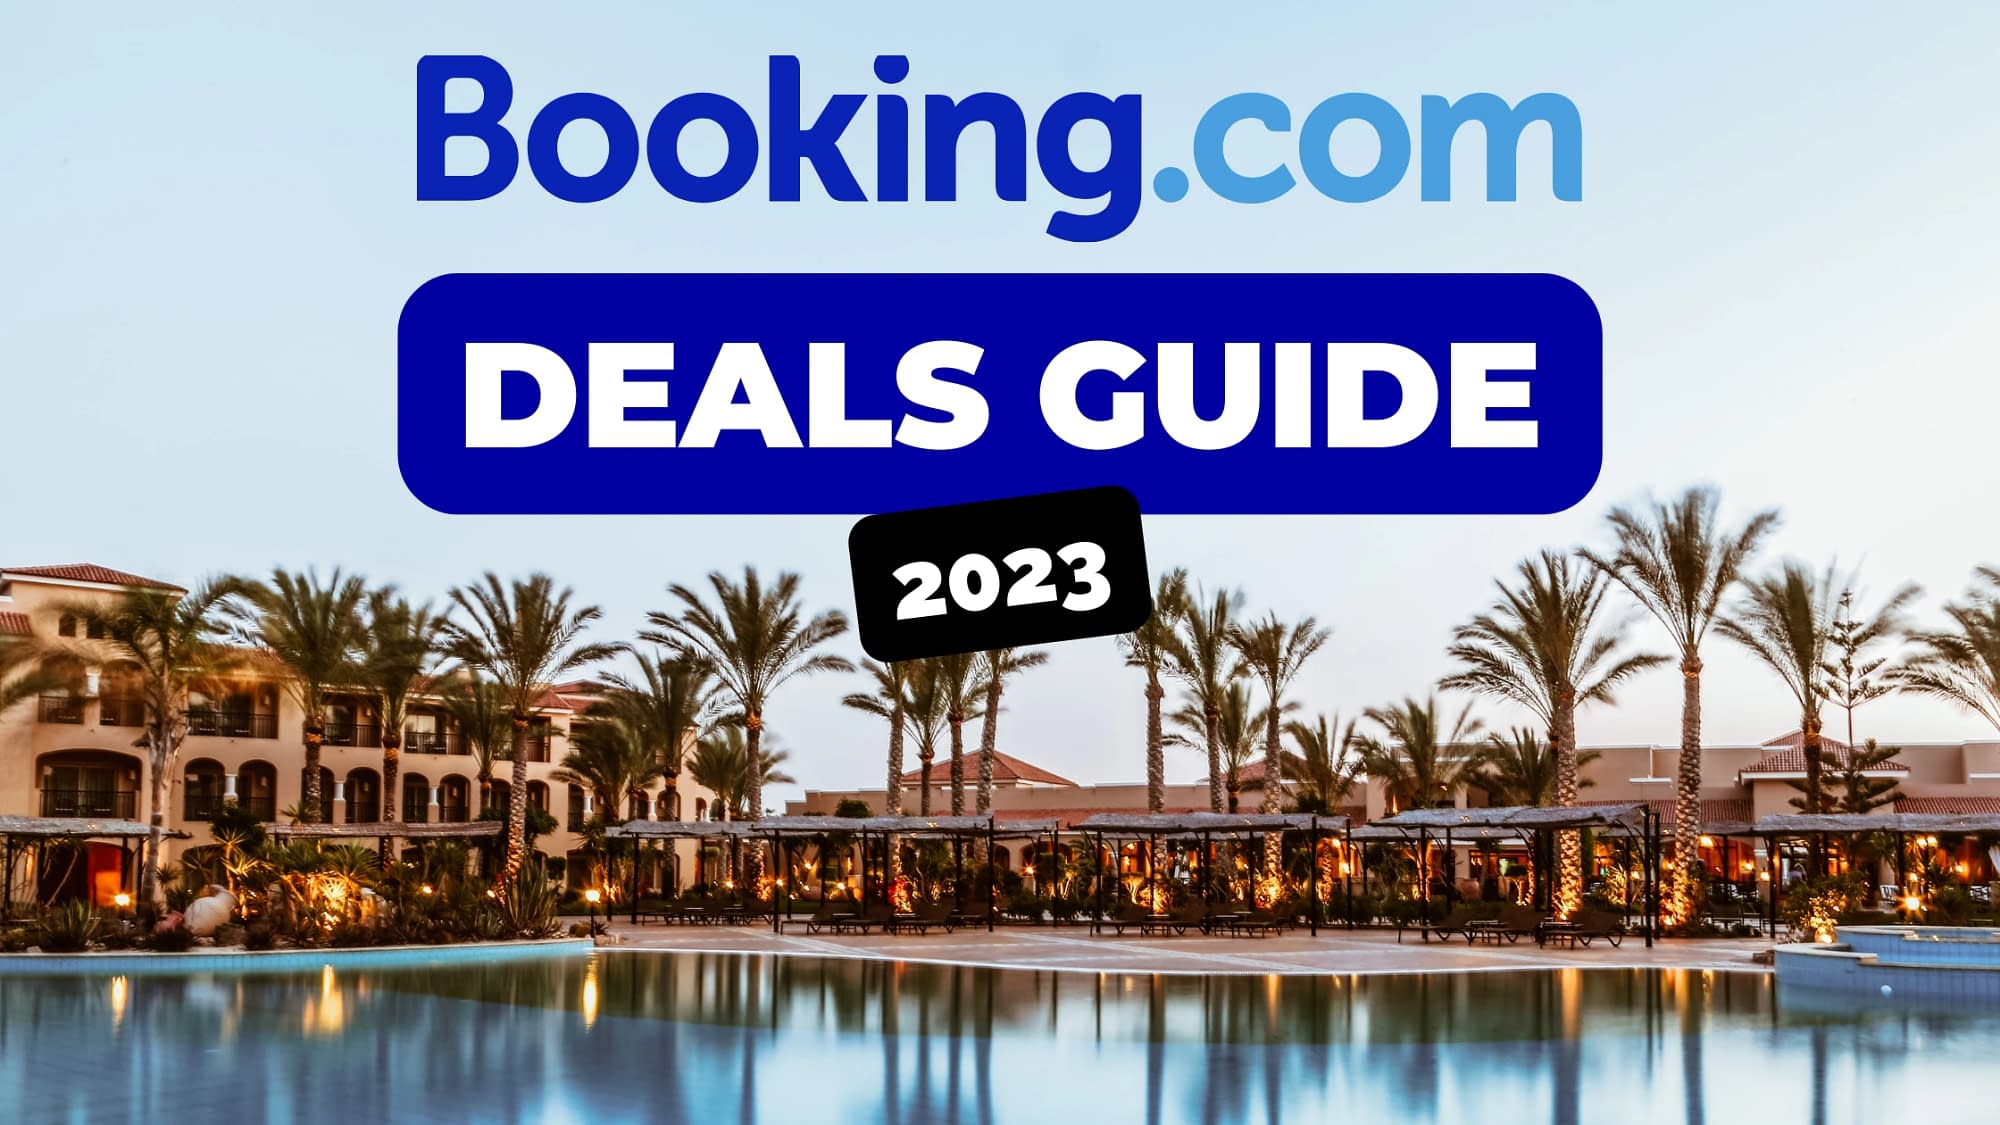 Booking.com Deals Guide (2023)